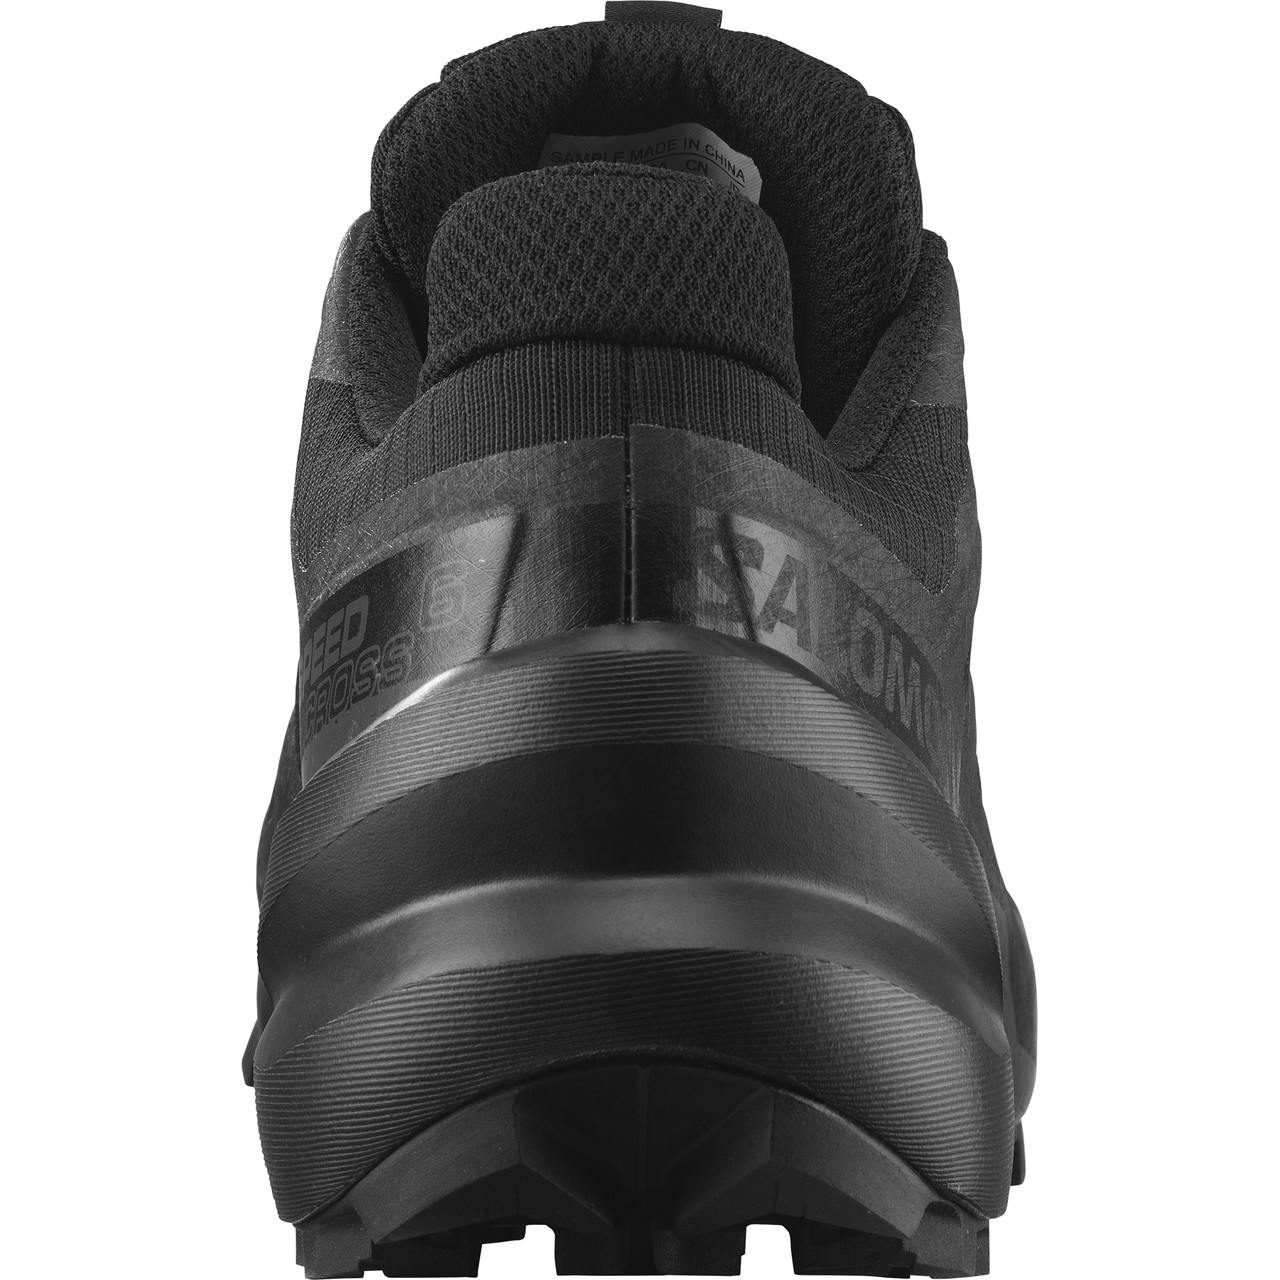 Speedcross 6 Gore-Tex Trail Running Shoes Black/Black/Phantom